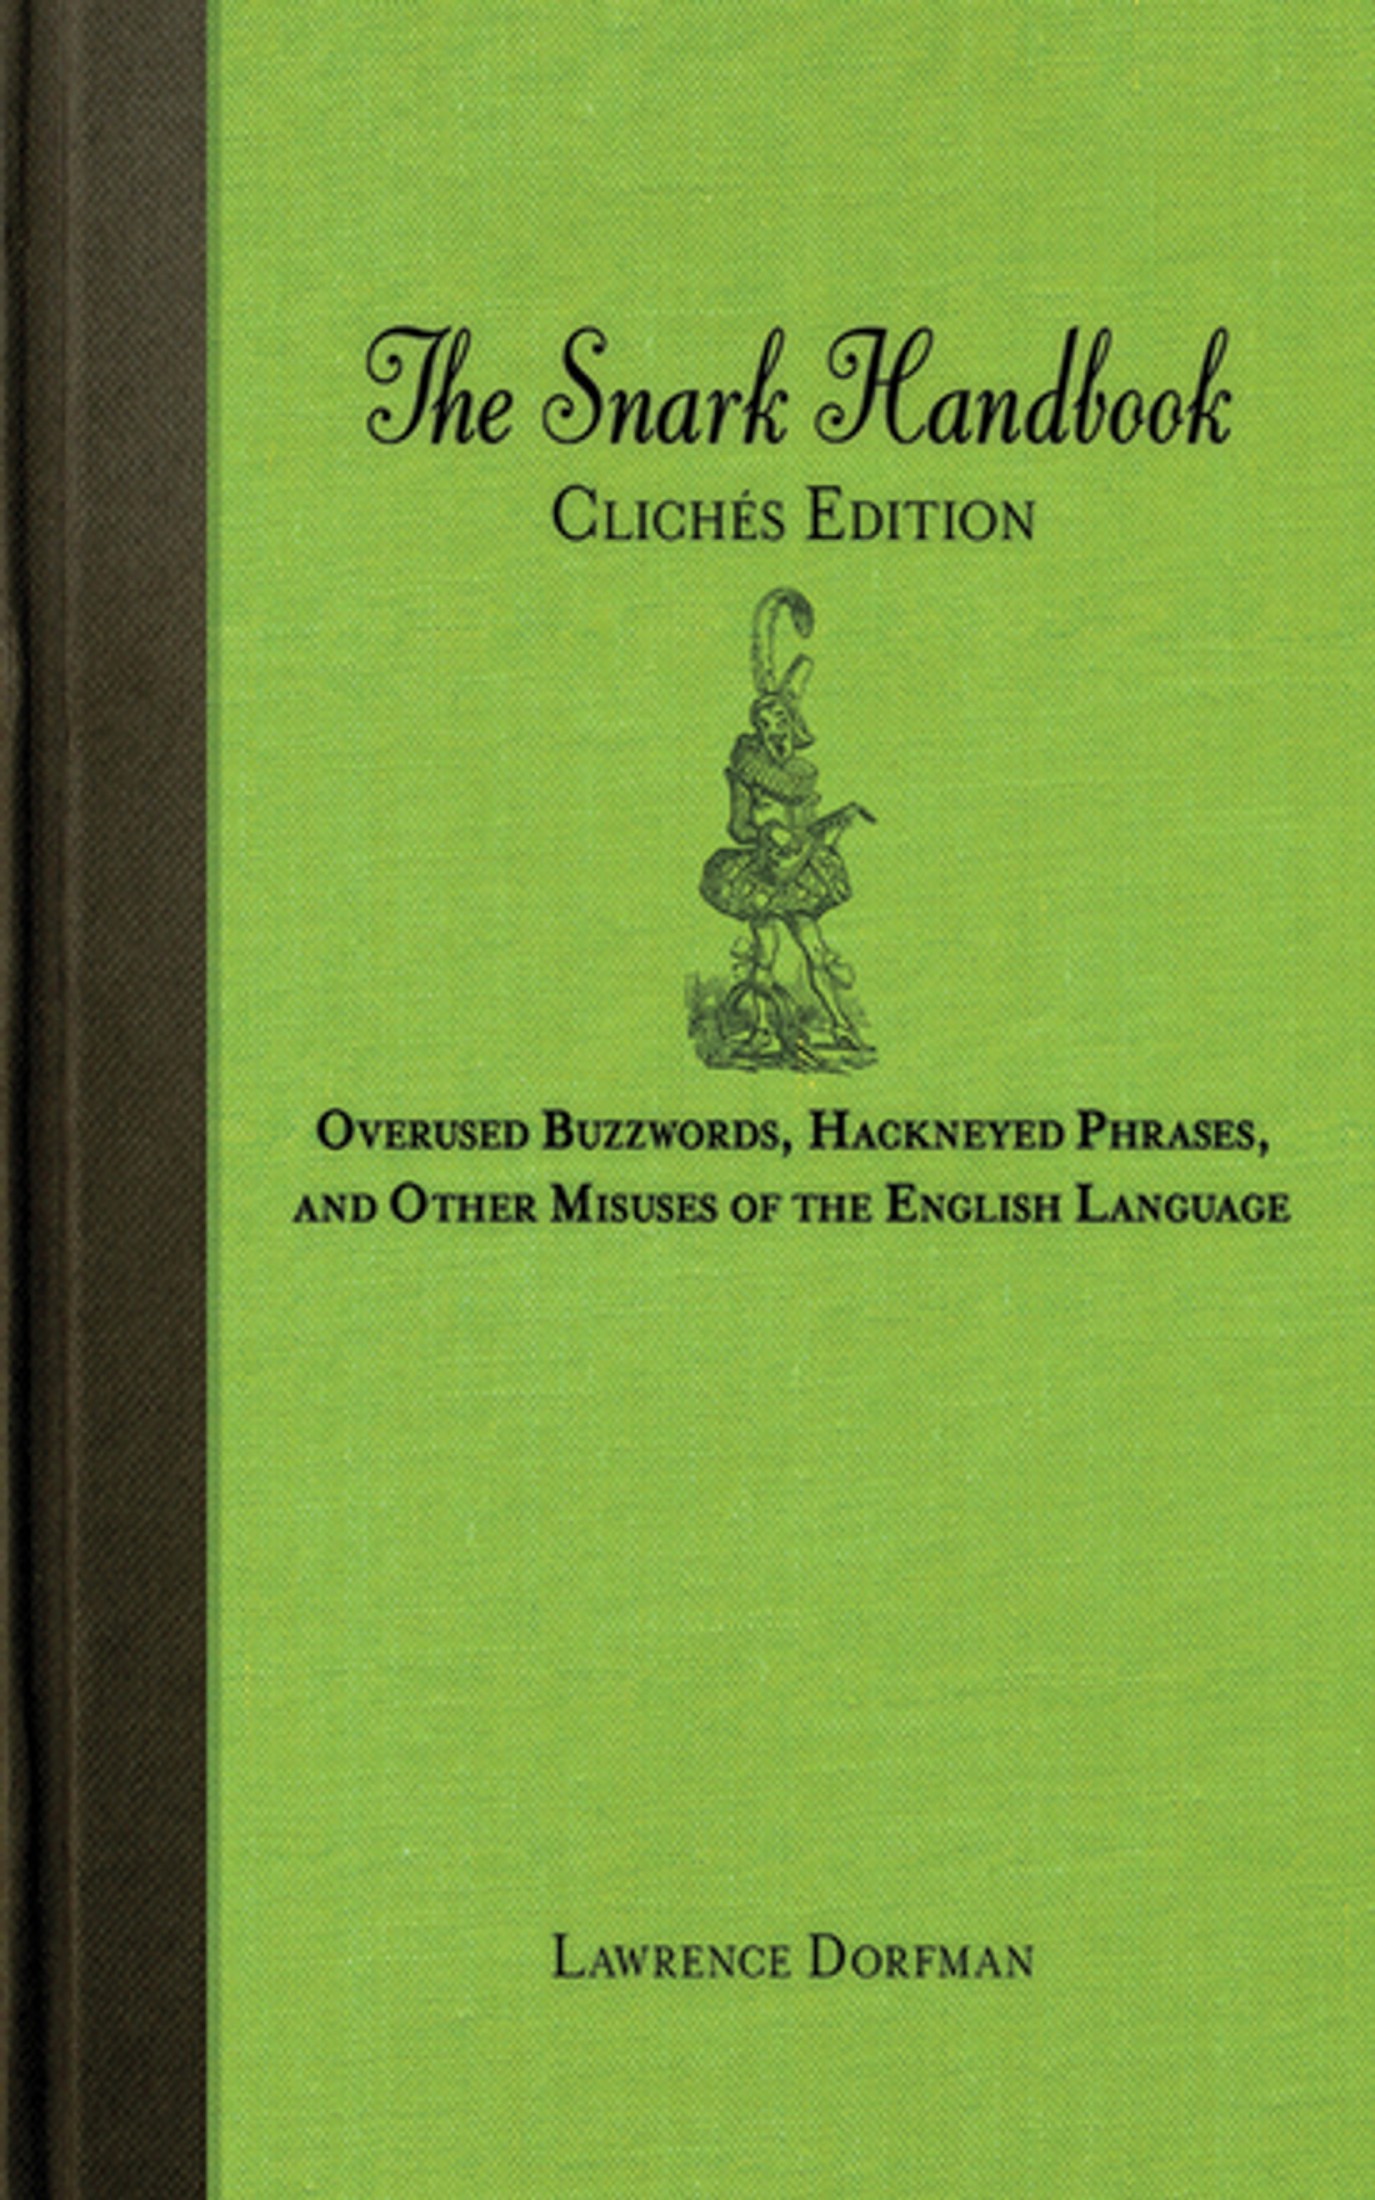 The Snark Handbook: Clichés Edition